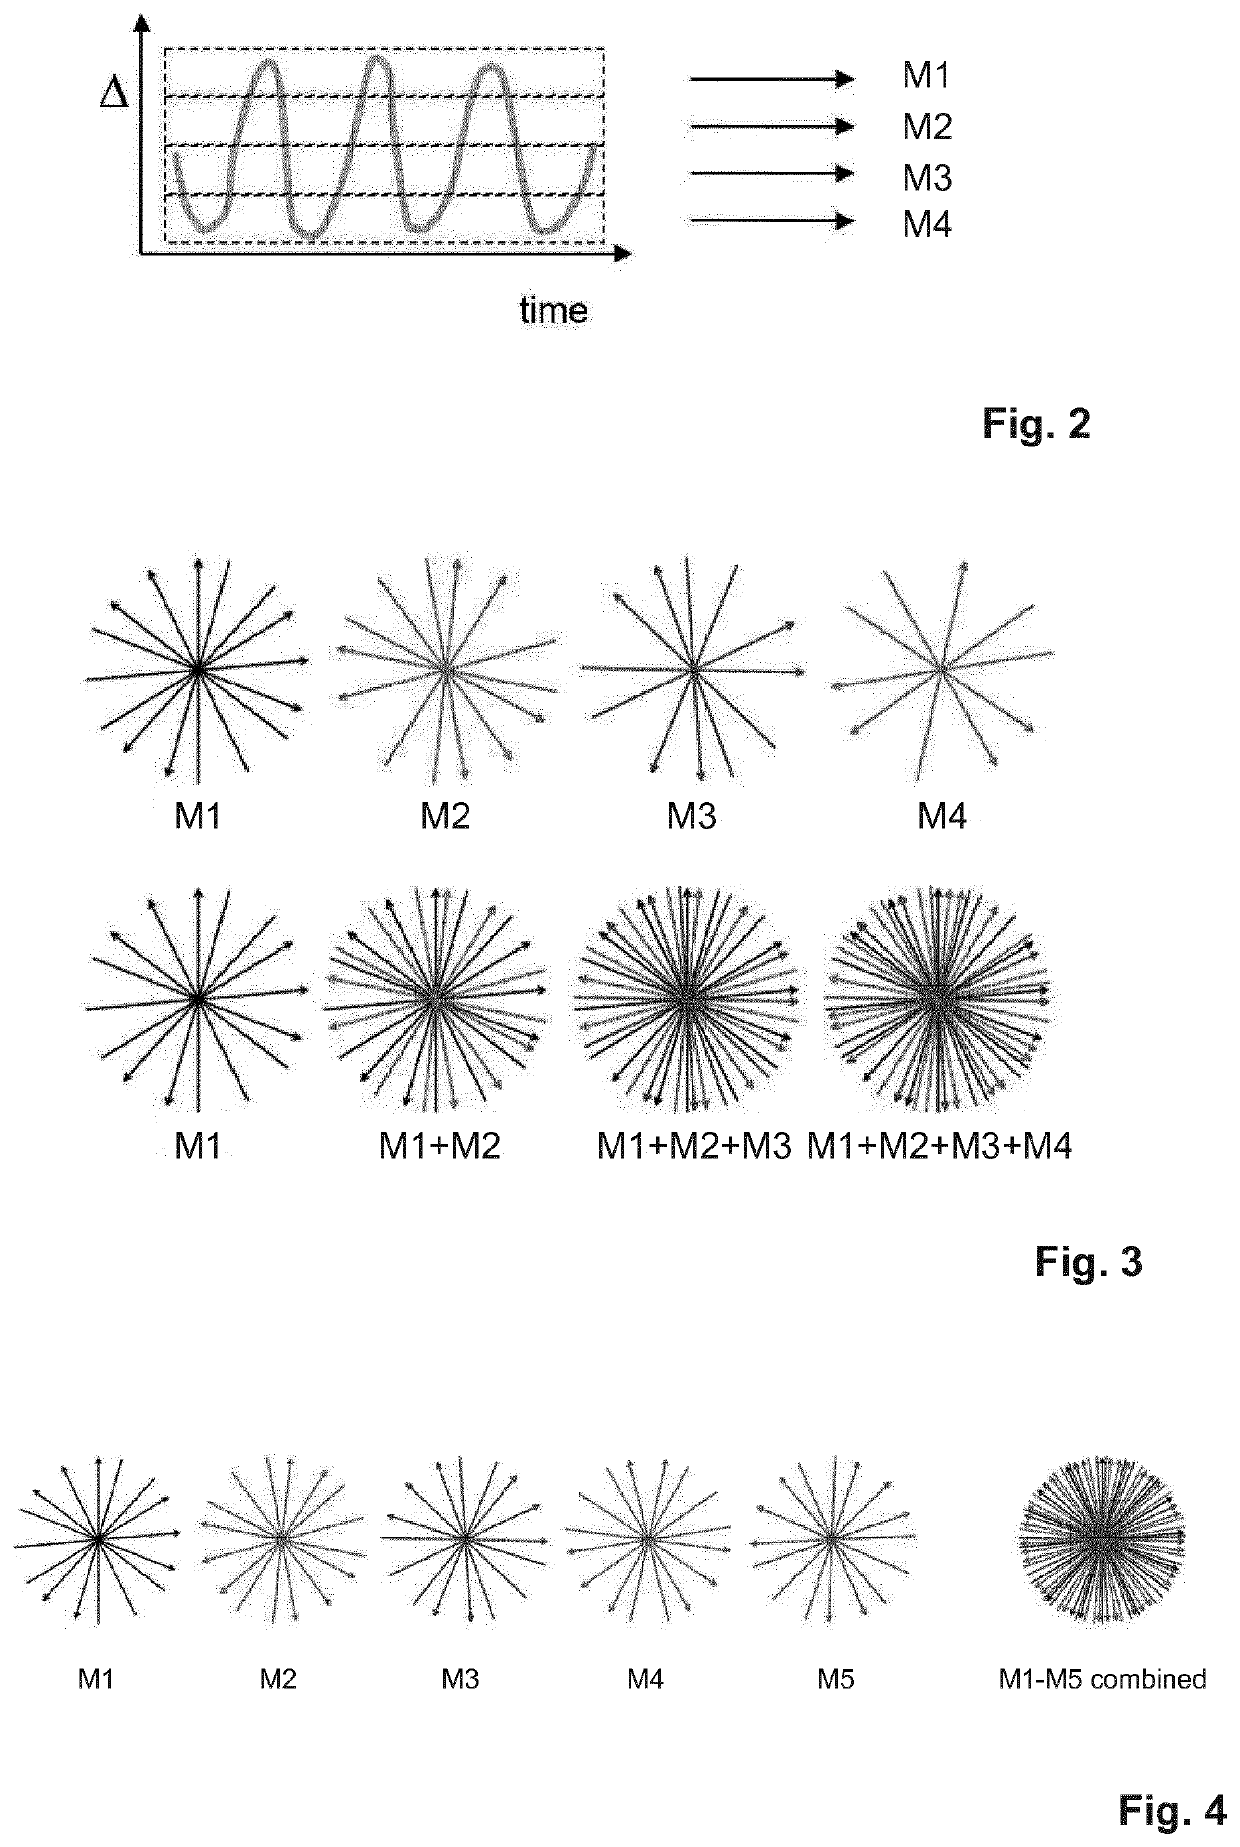 Mr imaging using motion-dependent radial or spiral k-space sampling